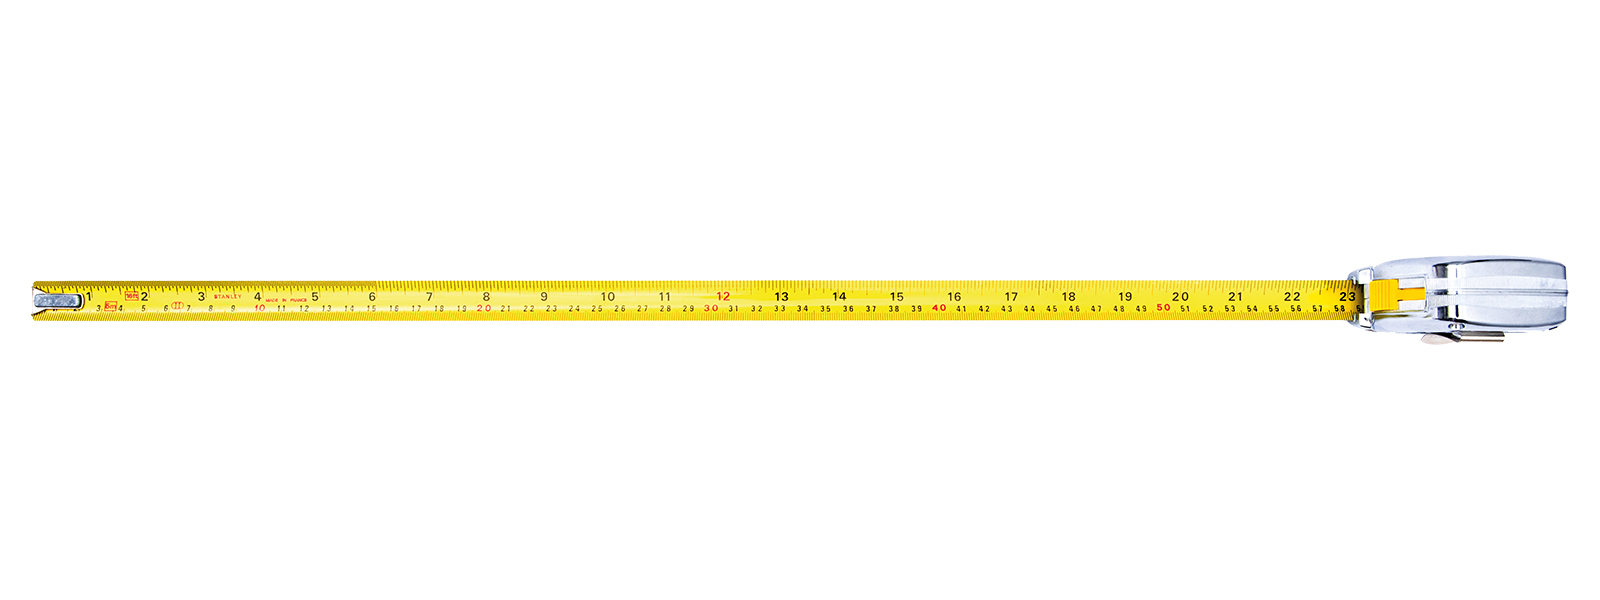 A tape measure